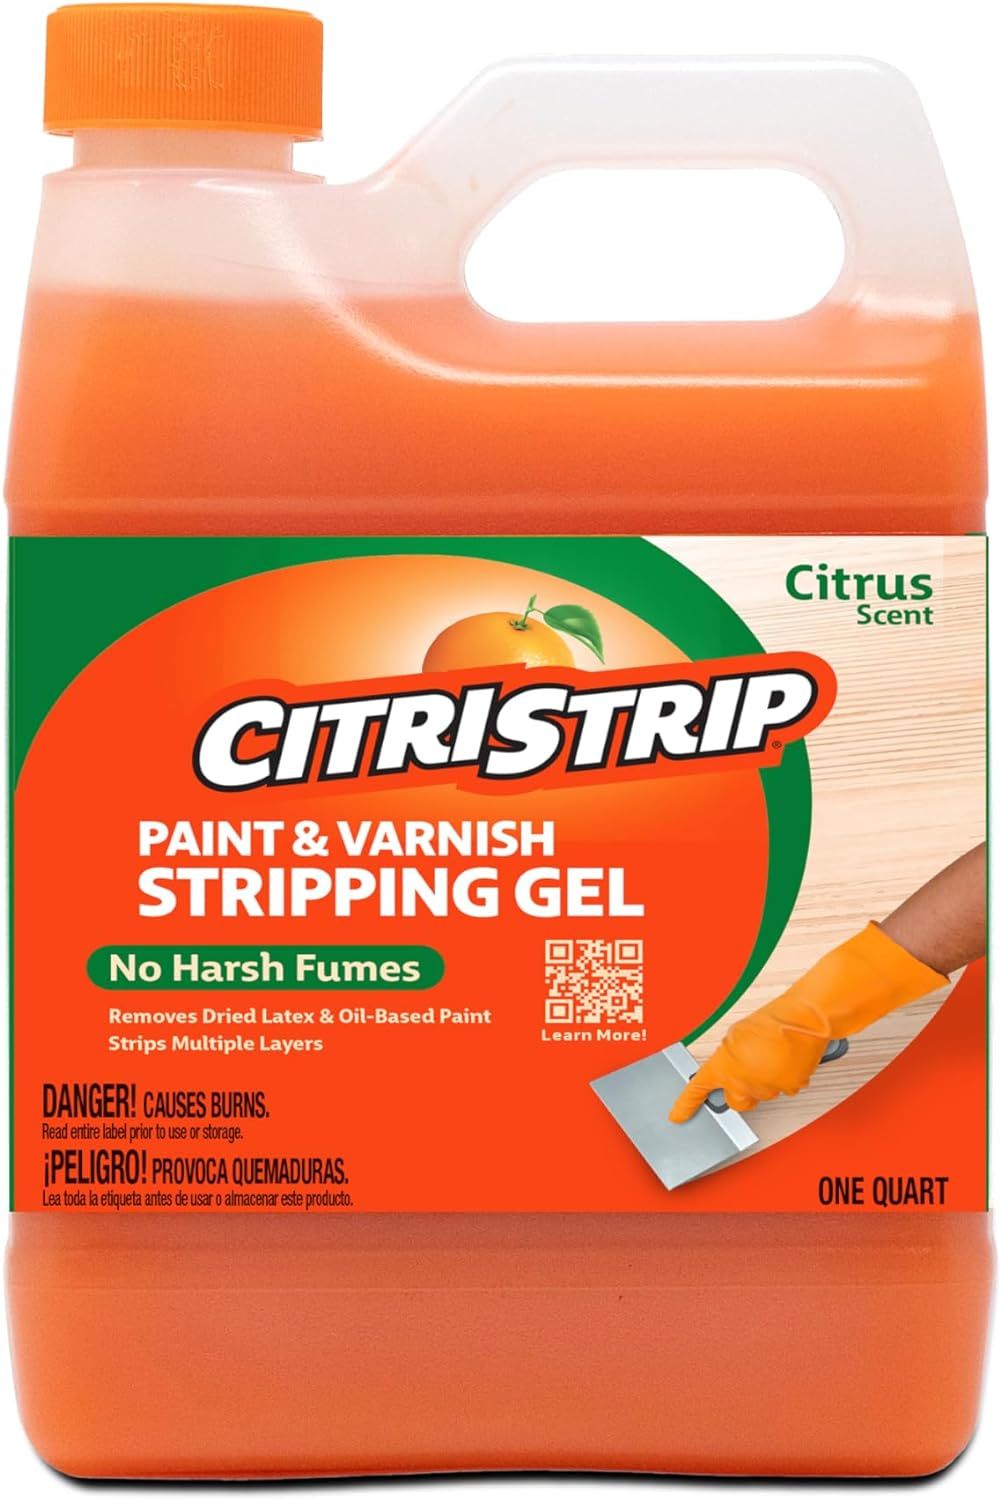 Citristrip Paint & Varnish Stripping Gel Logo